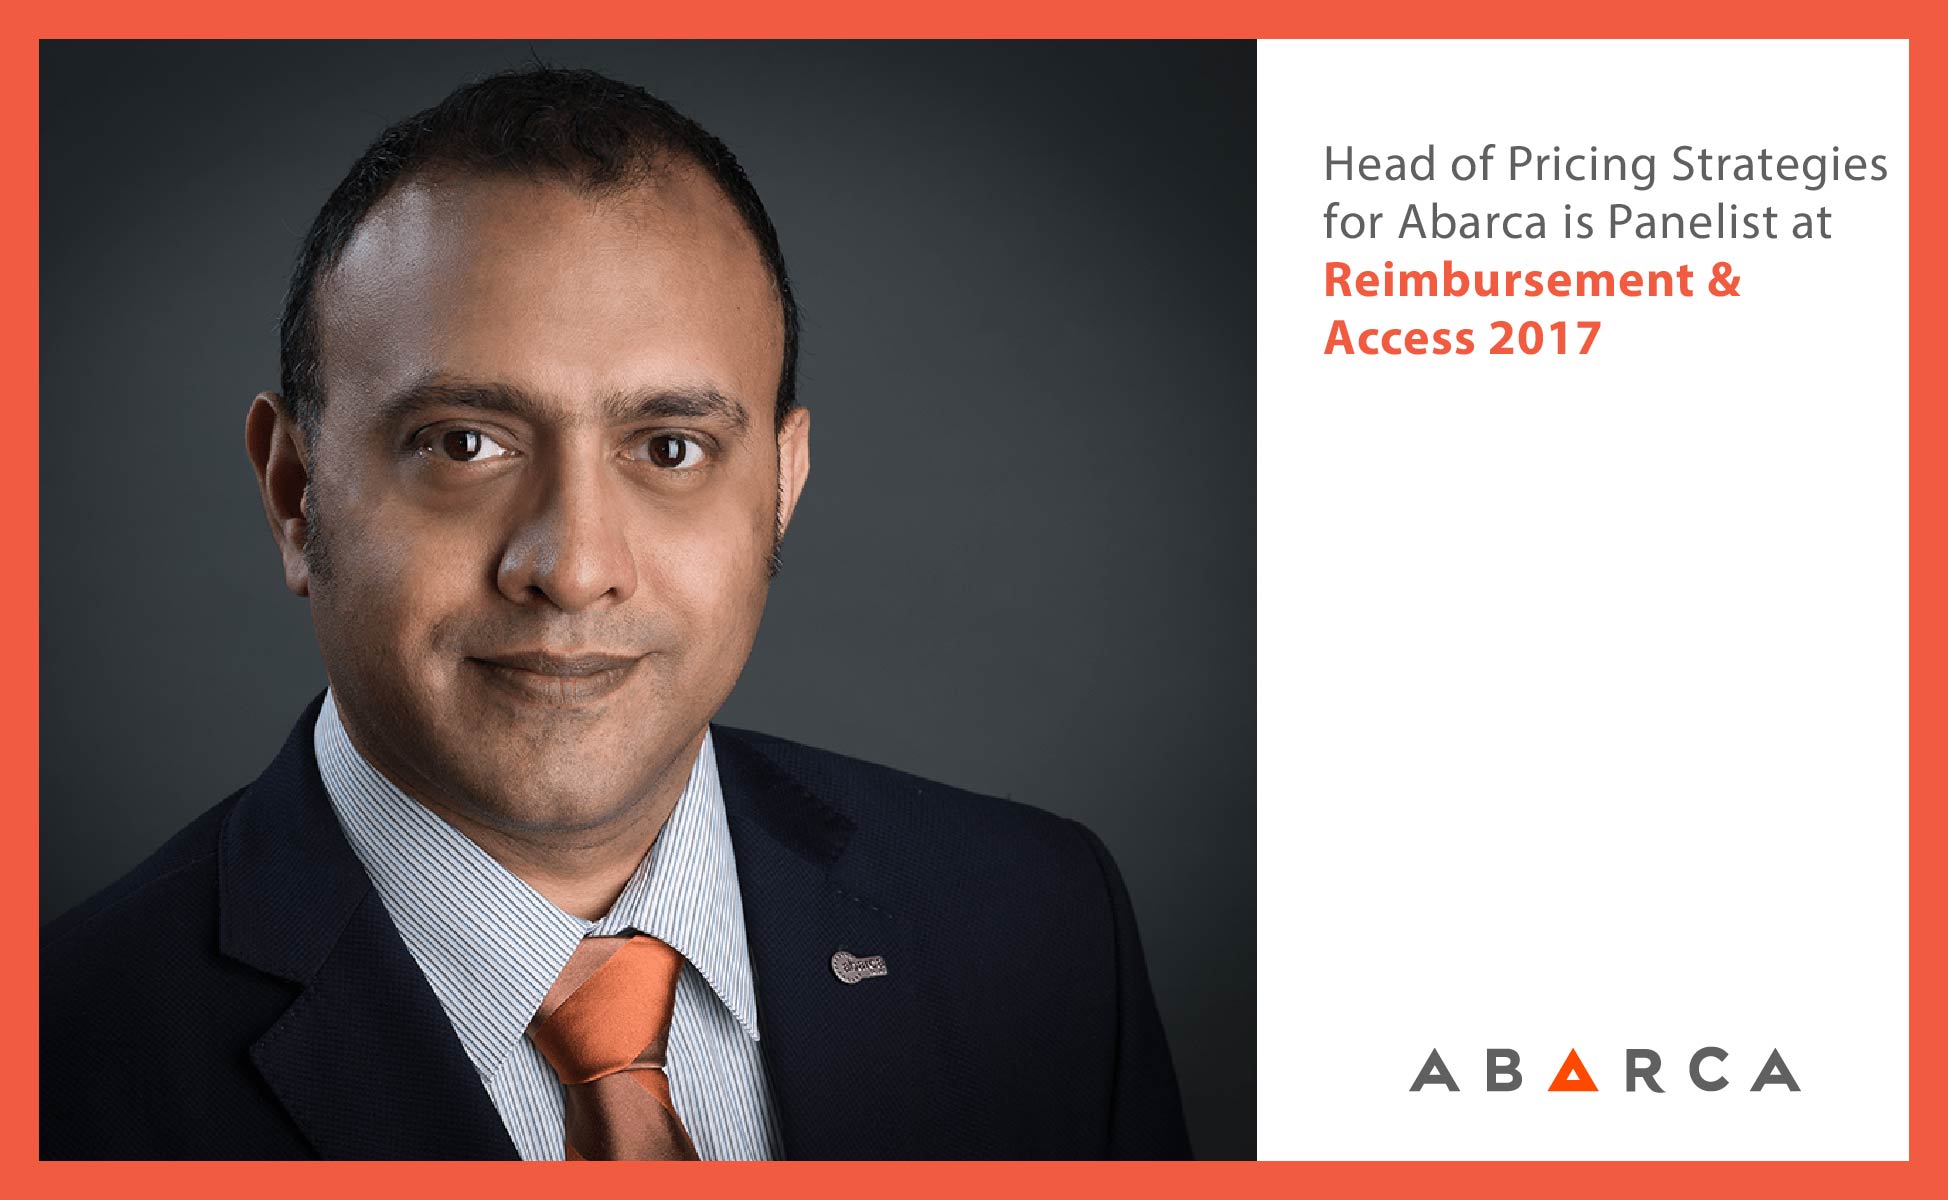 Abarca's Head of Pricing Strategies, Samir Mistry, is a panelist at Reimbursement & Access 2017